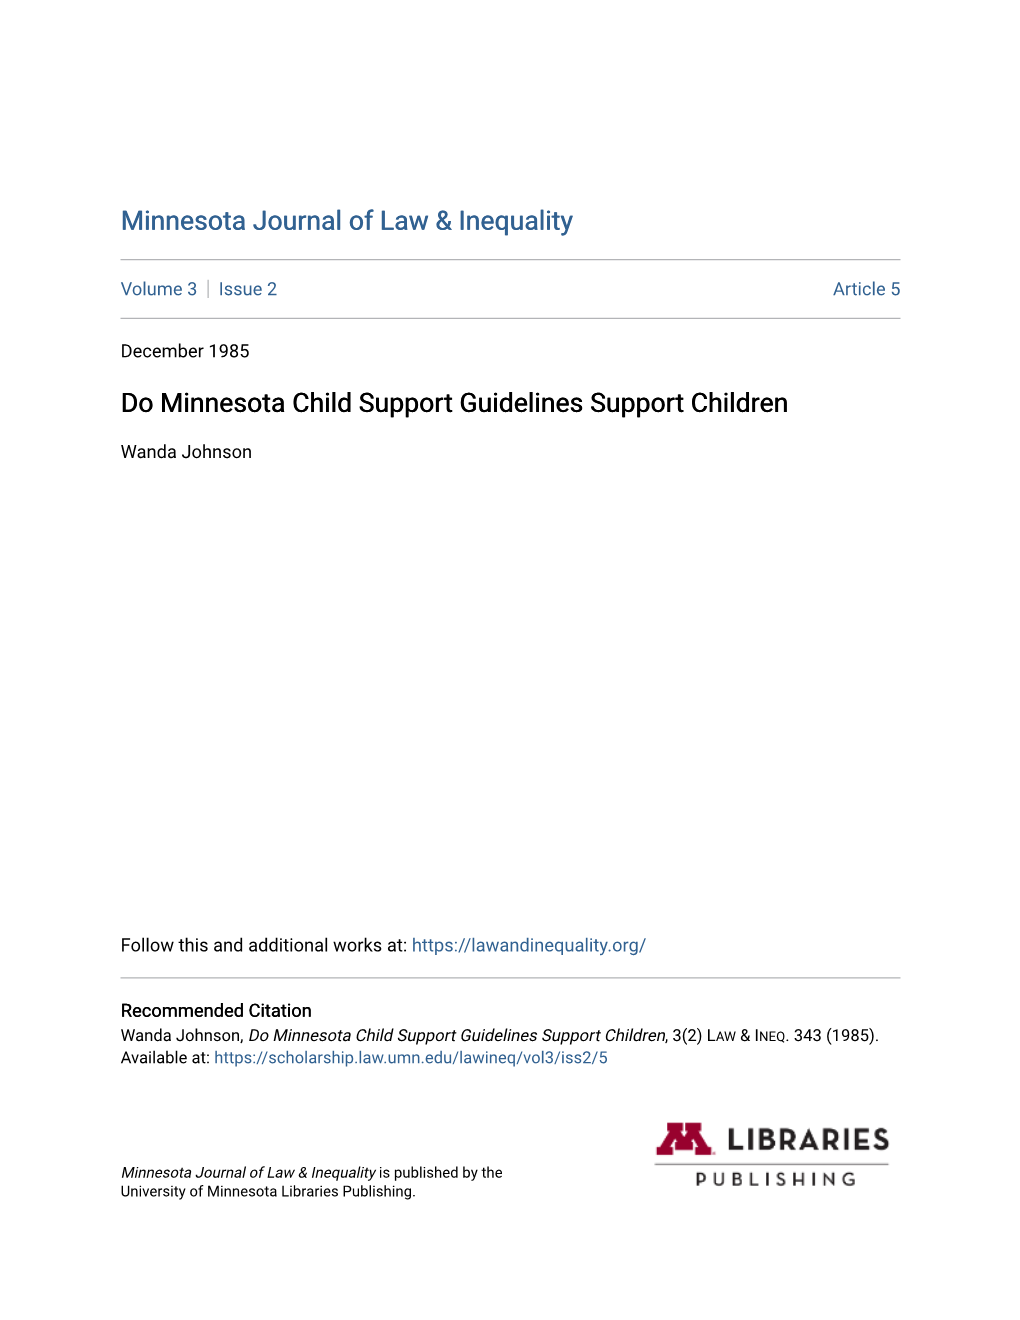 Do Minnesota Child Support Guidelines Support Children